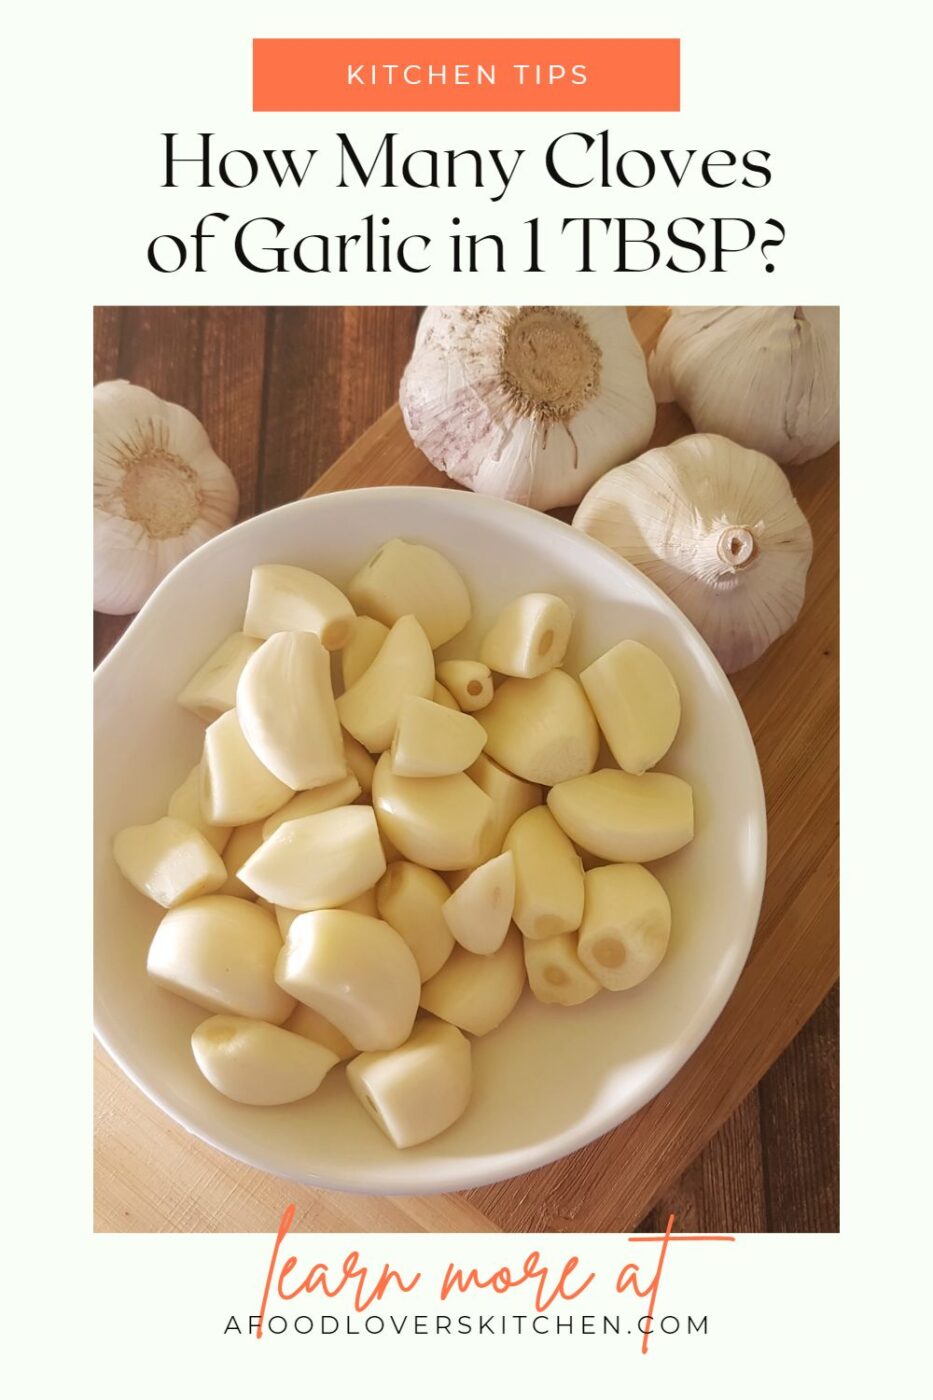 How Many Tbsp in a Clove of Garlic?